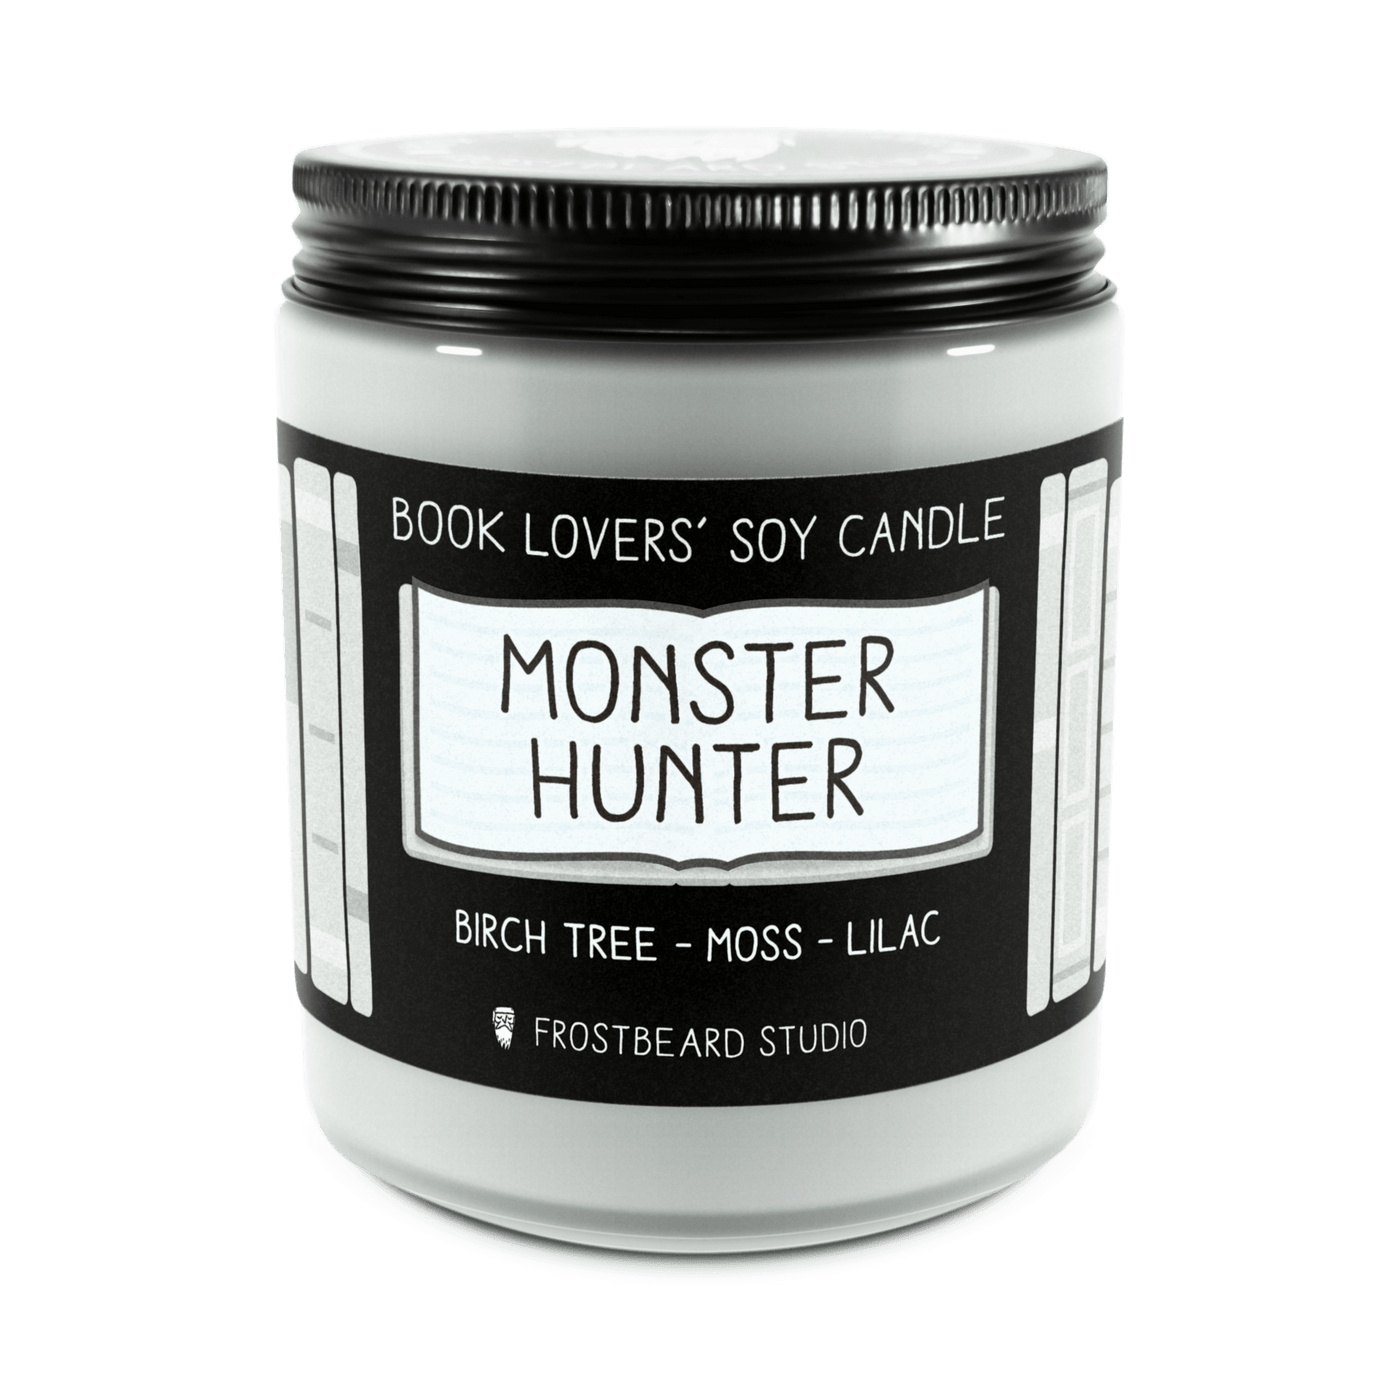 Monster Hunter - 8 oz Jar - Book Lovers' Soy Candle - Frostbeard Studio